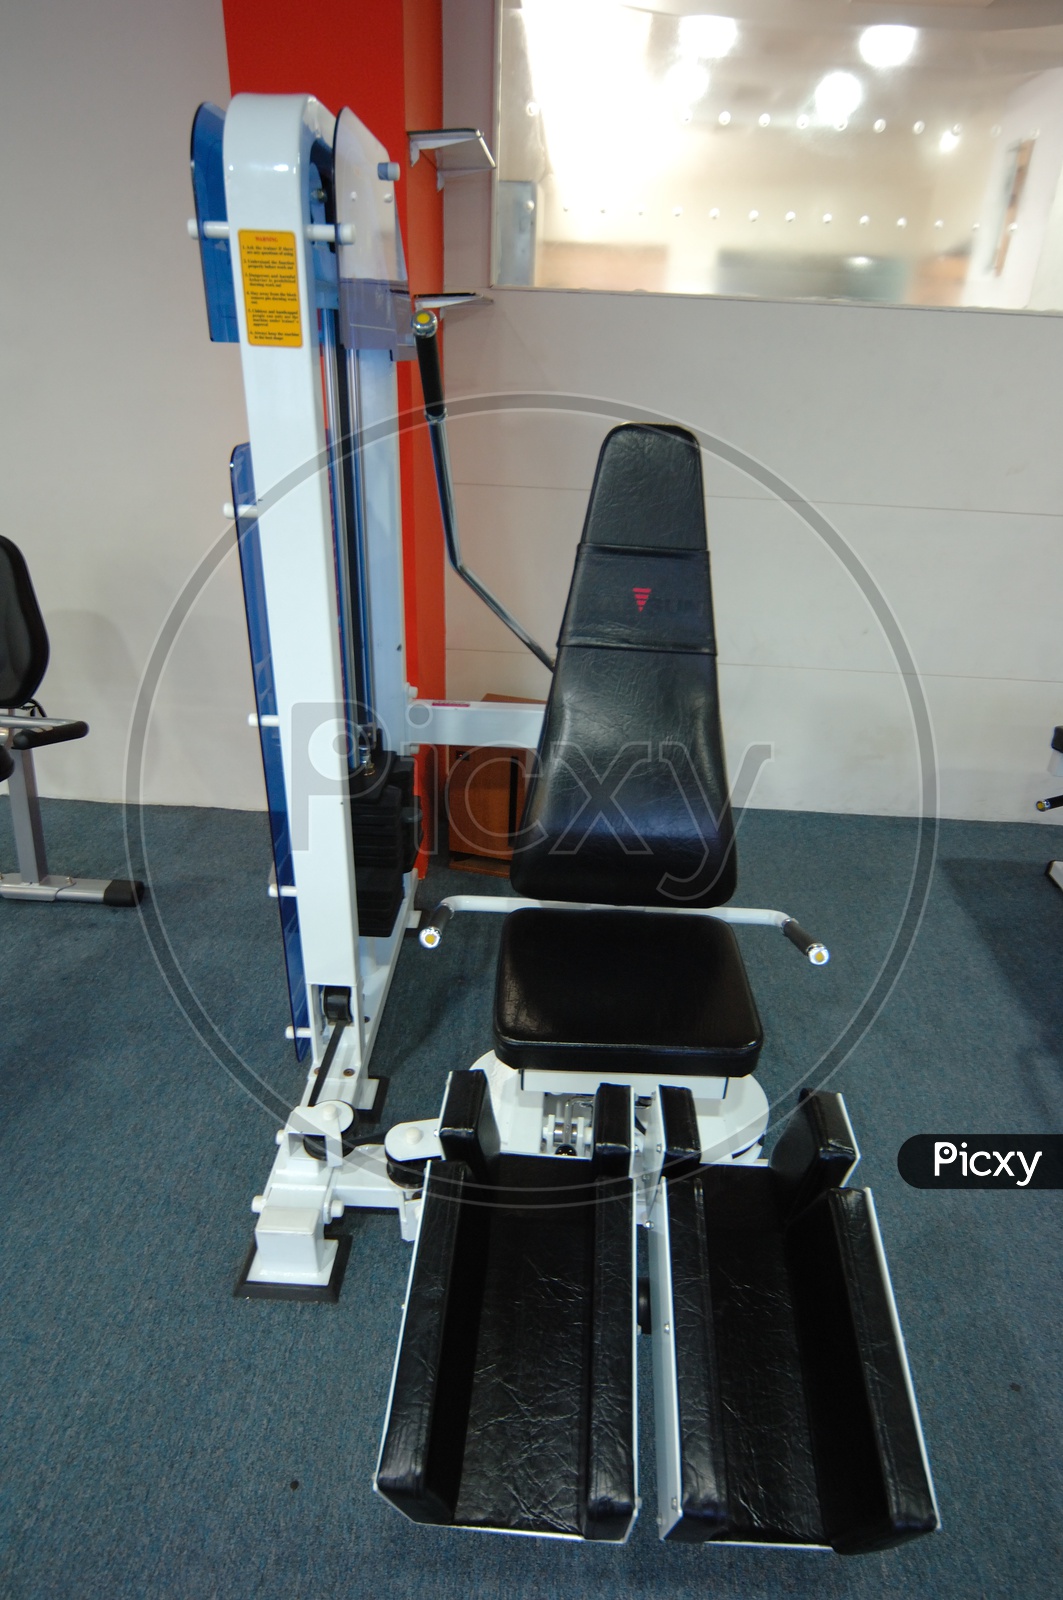 Leg Abduction machine in a Gym